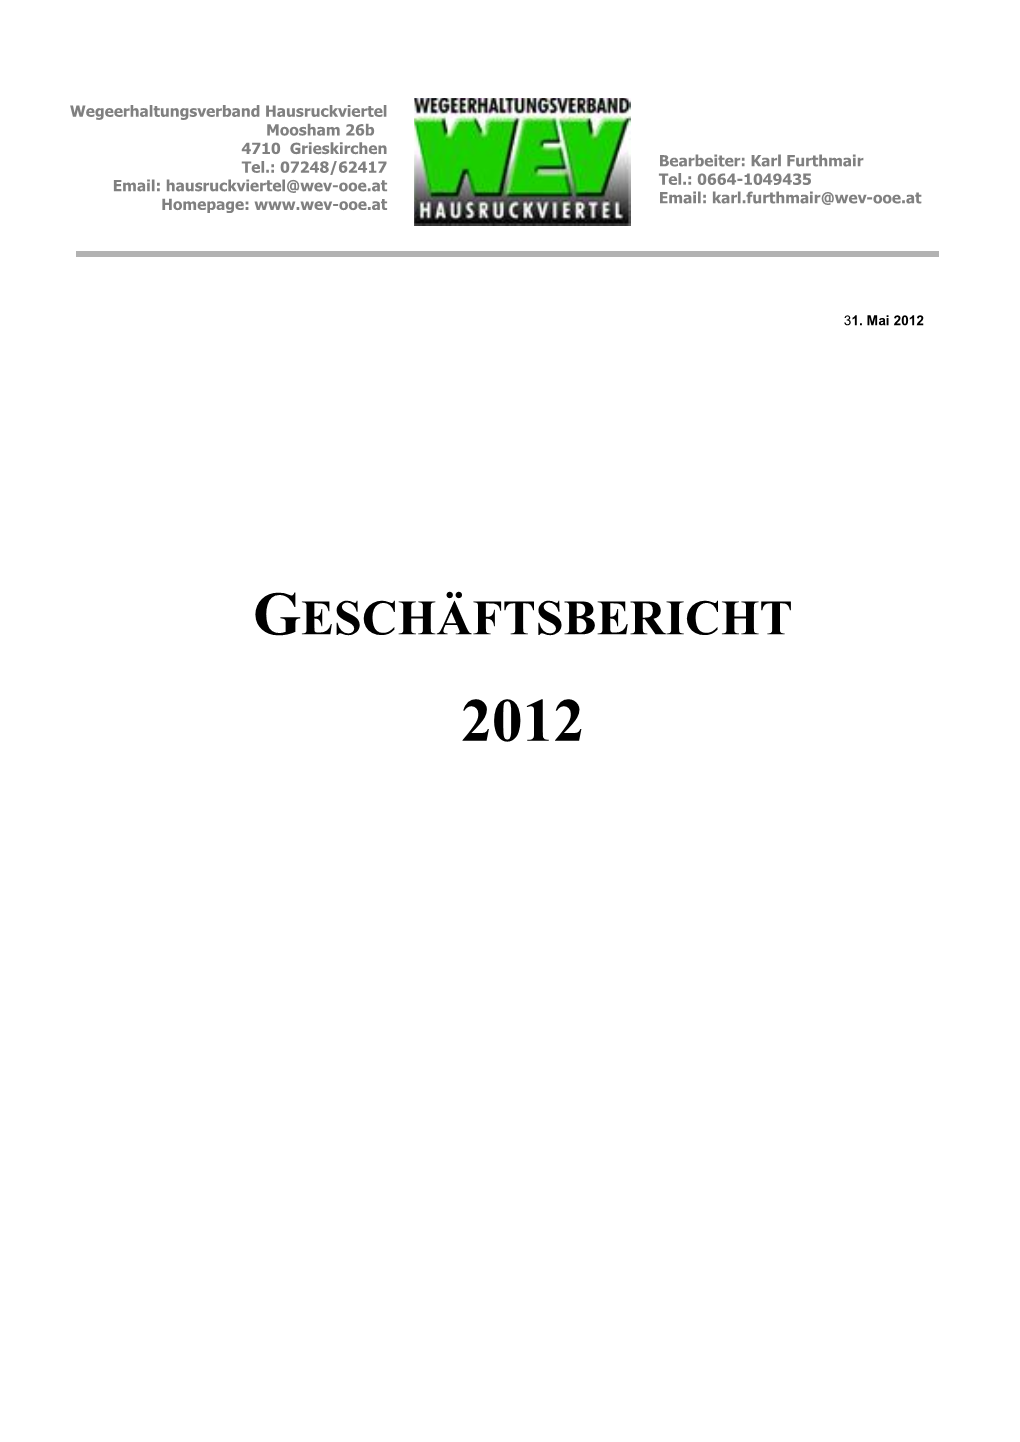 Geschäftsbericht 2012 Wev – Hausruckviertel Geschäftsbericht 2012